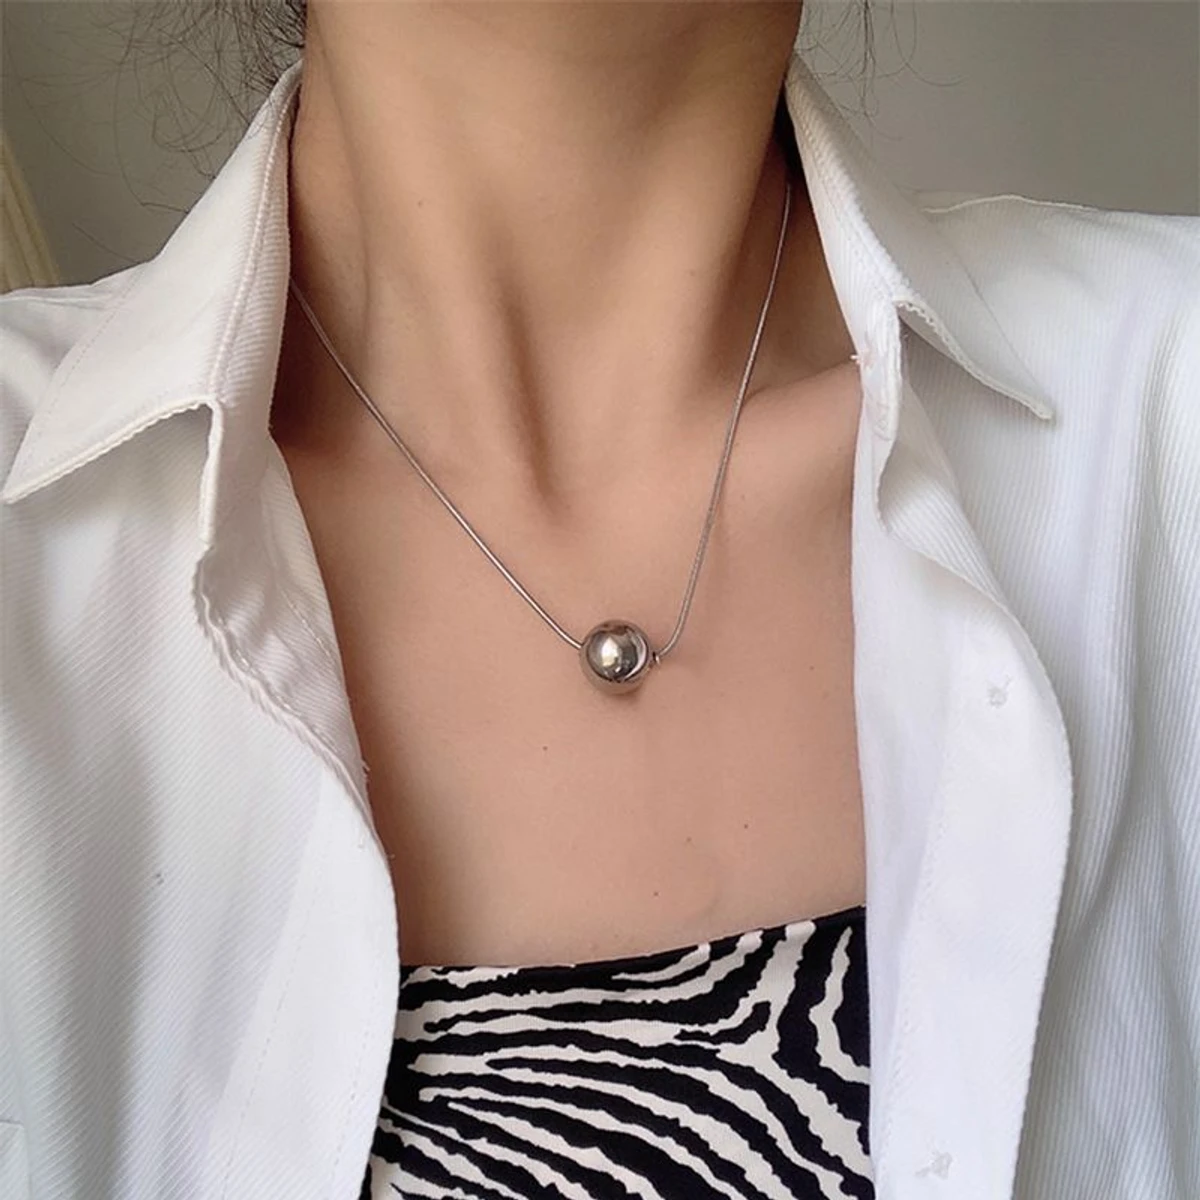 Korean elegant pearl necklace